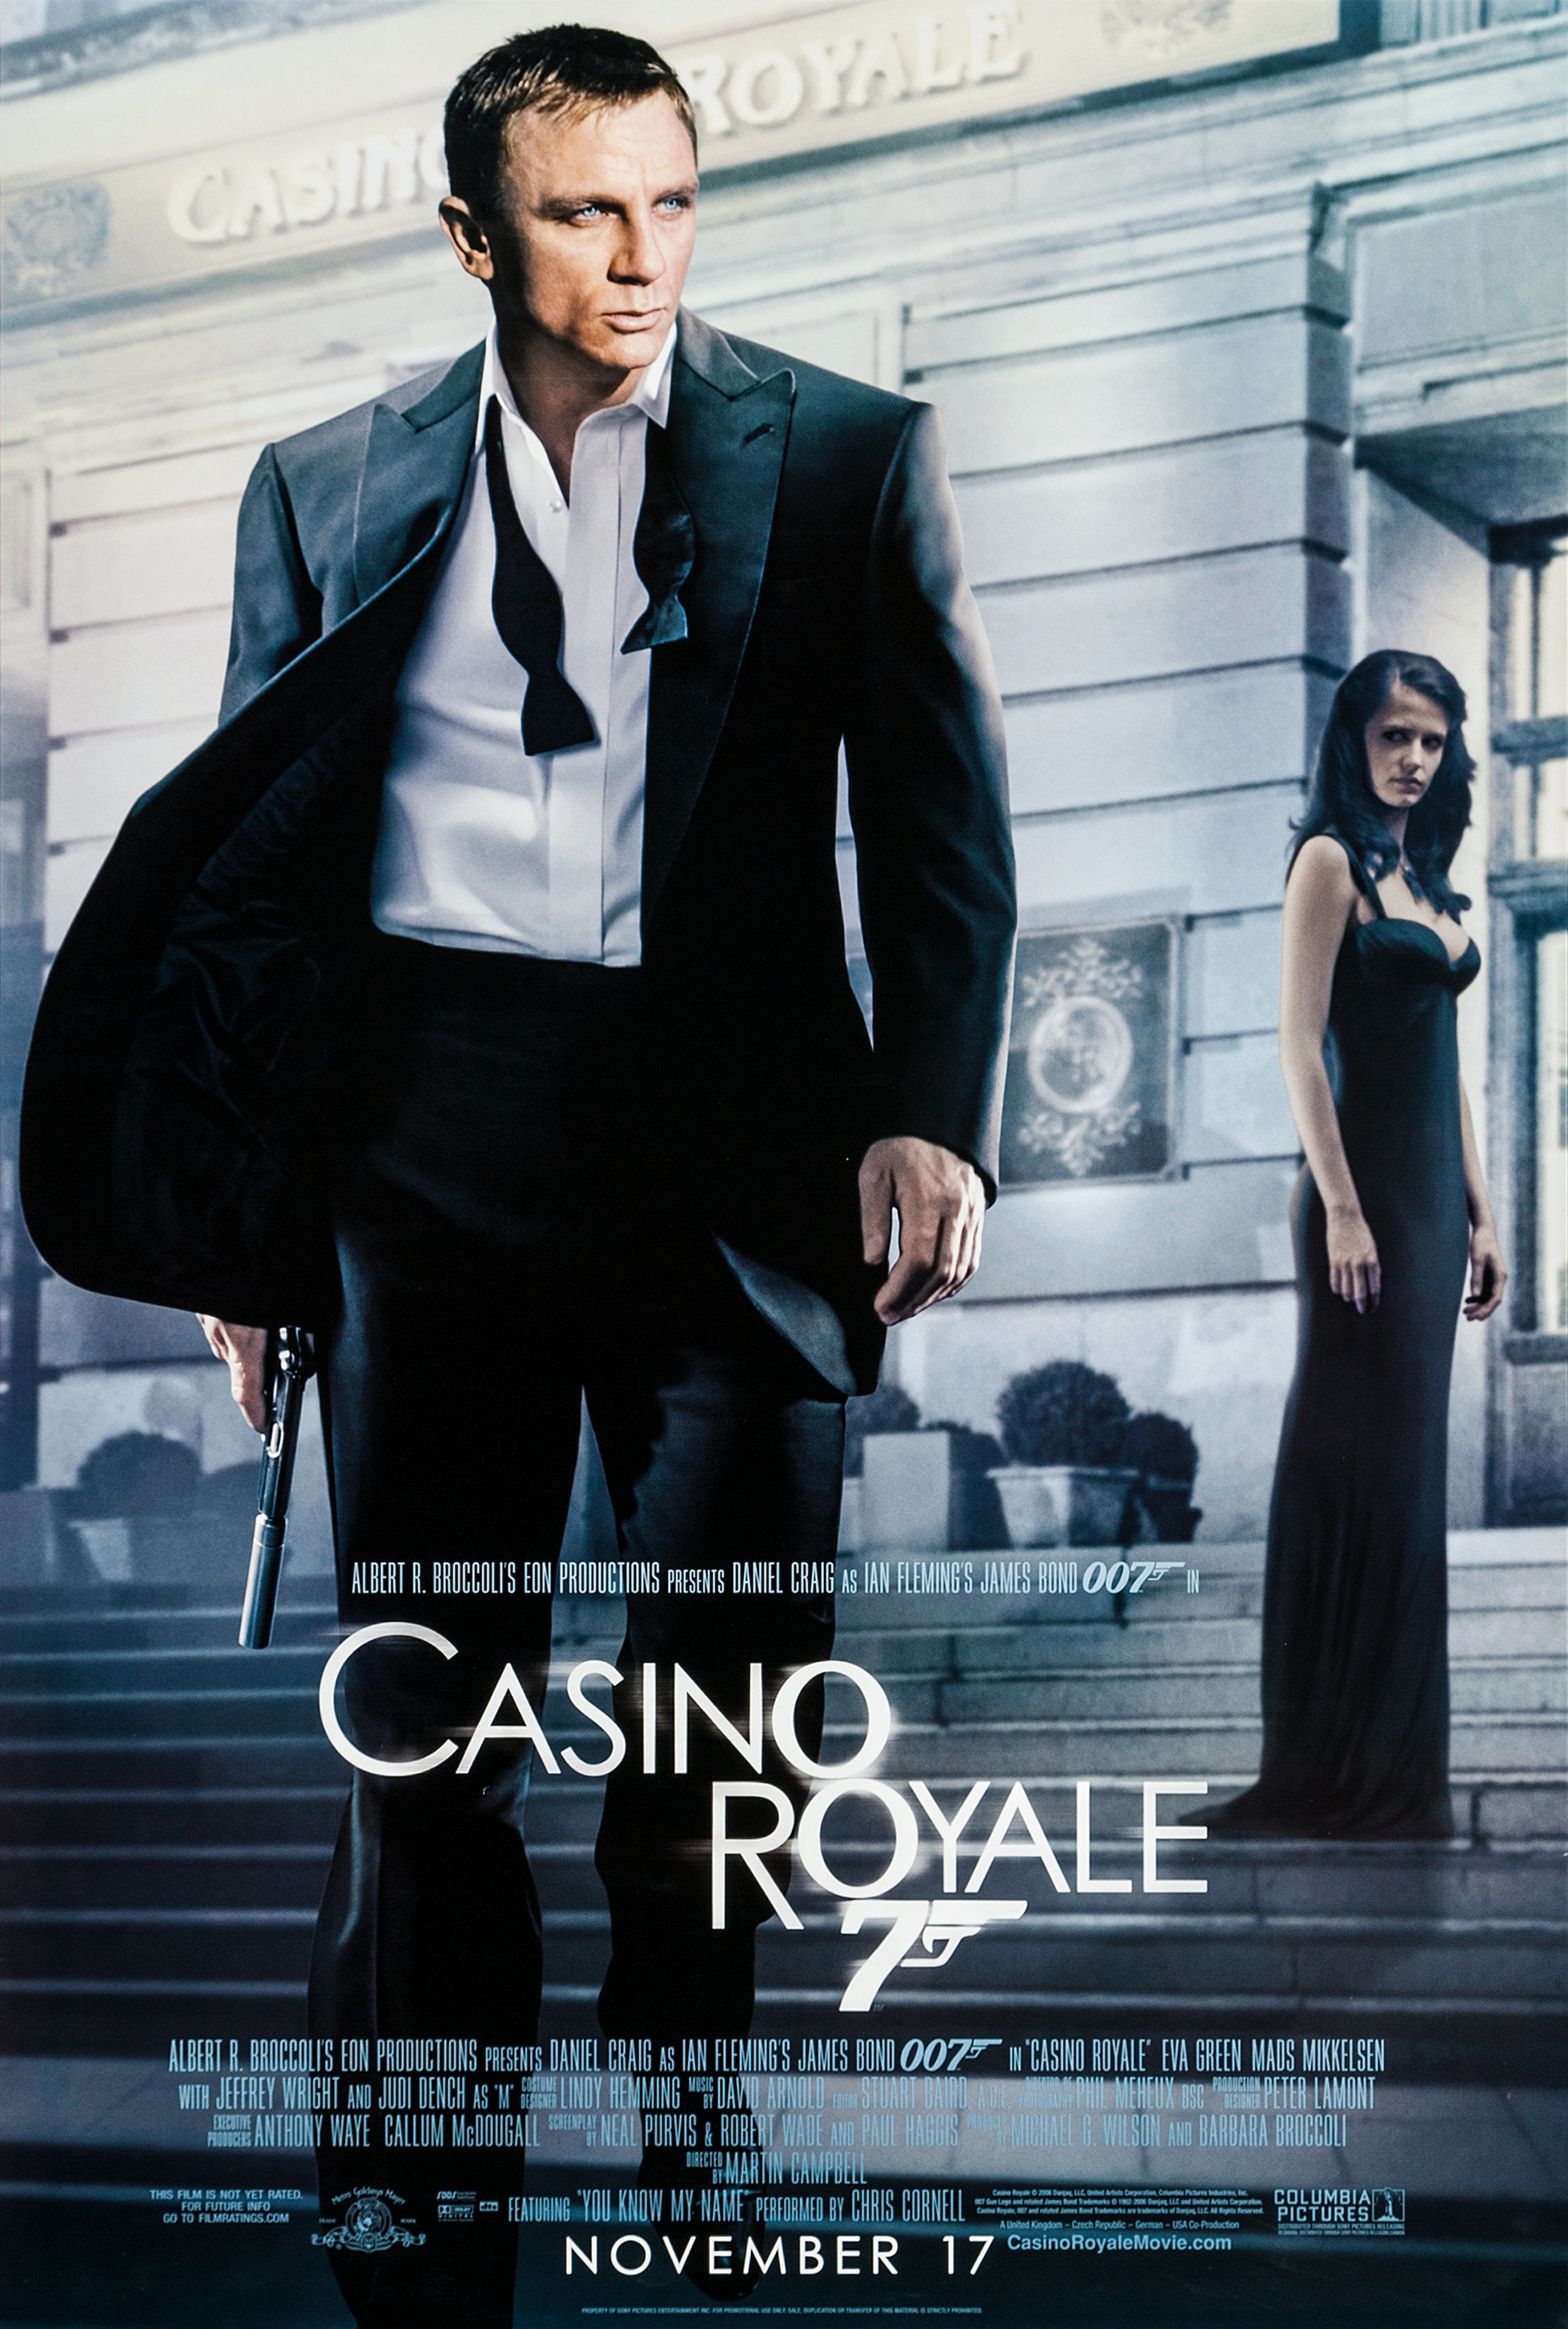 https://static.wikia.nocookie.net/jamesbond/images/e/e9/James_Bond-_Casino_Royale_Theactrical_Poster.JPG/revision/latest?cb=20210430005435